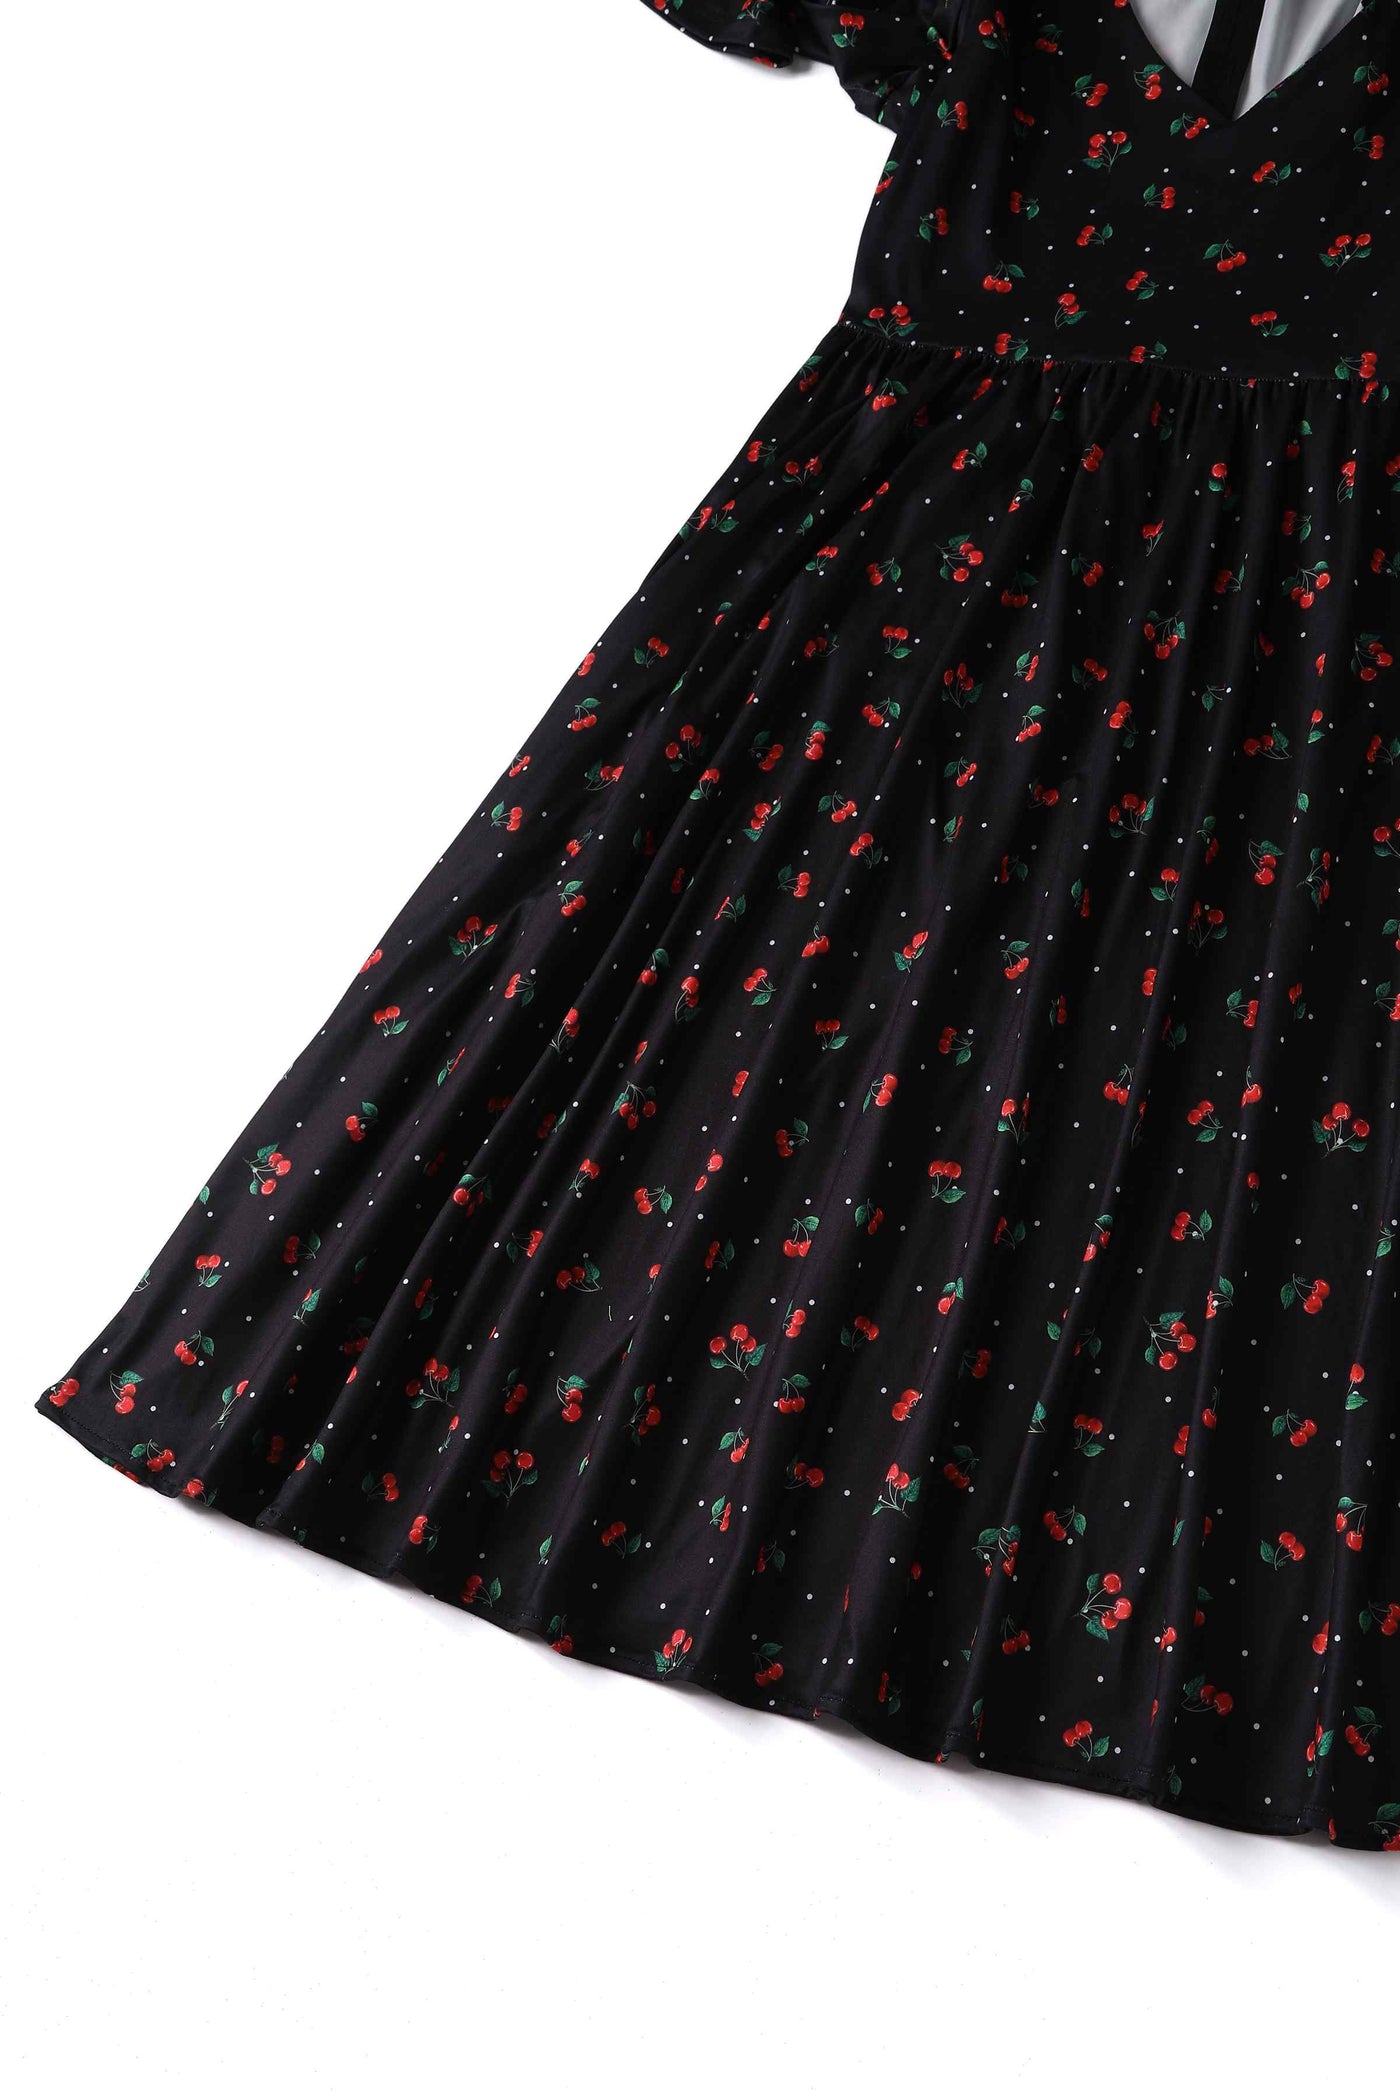 Long Sleeved Cherry Dress